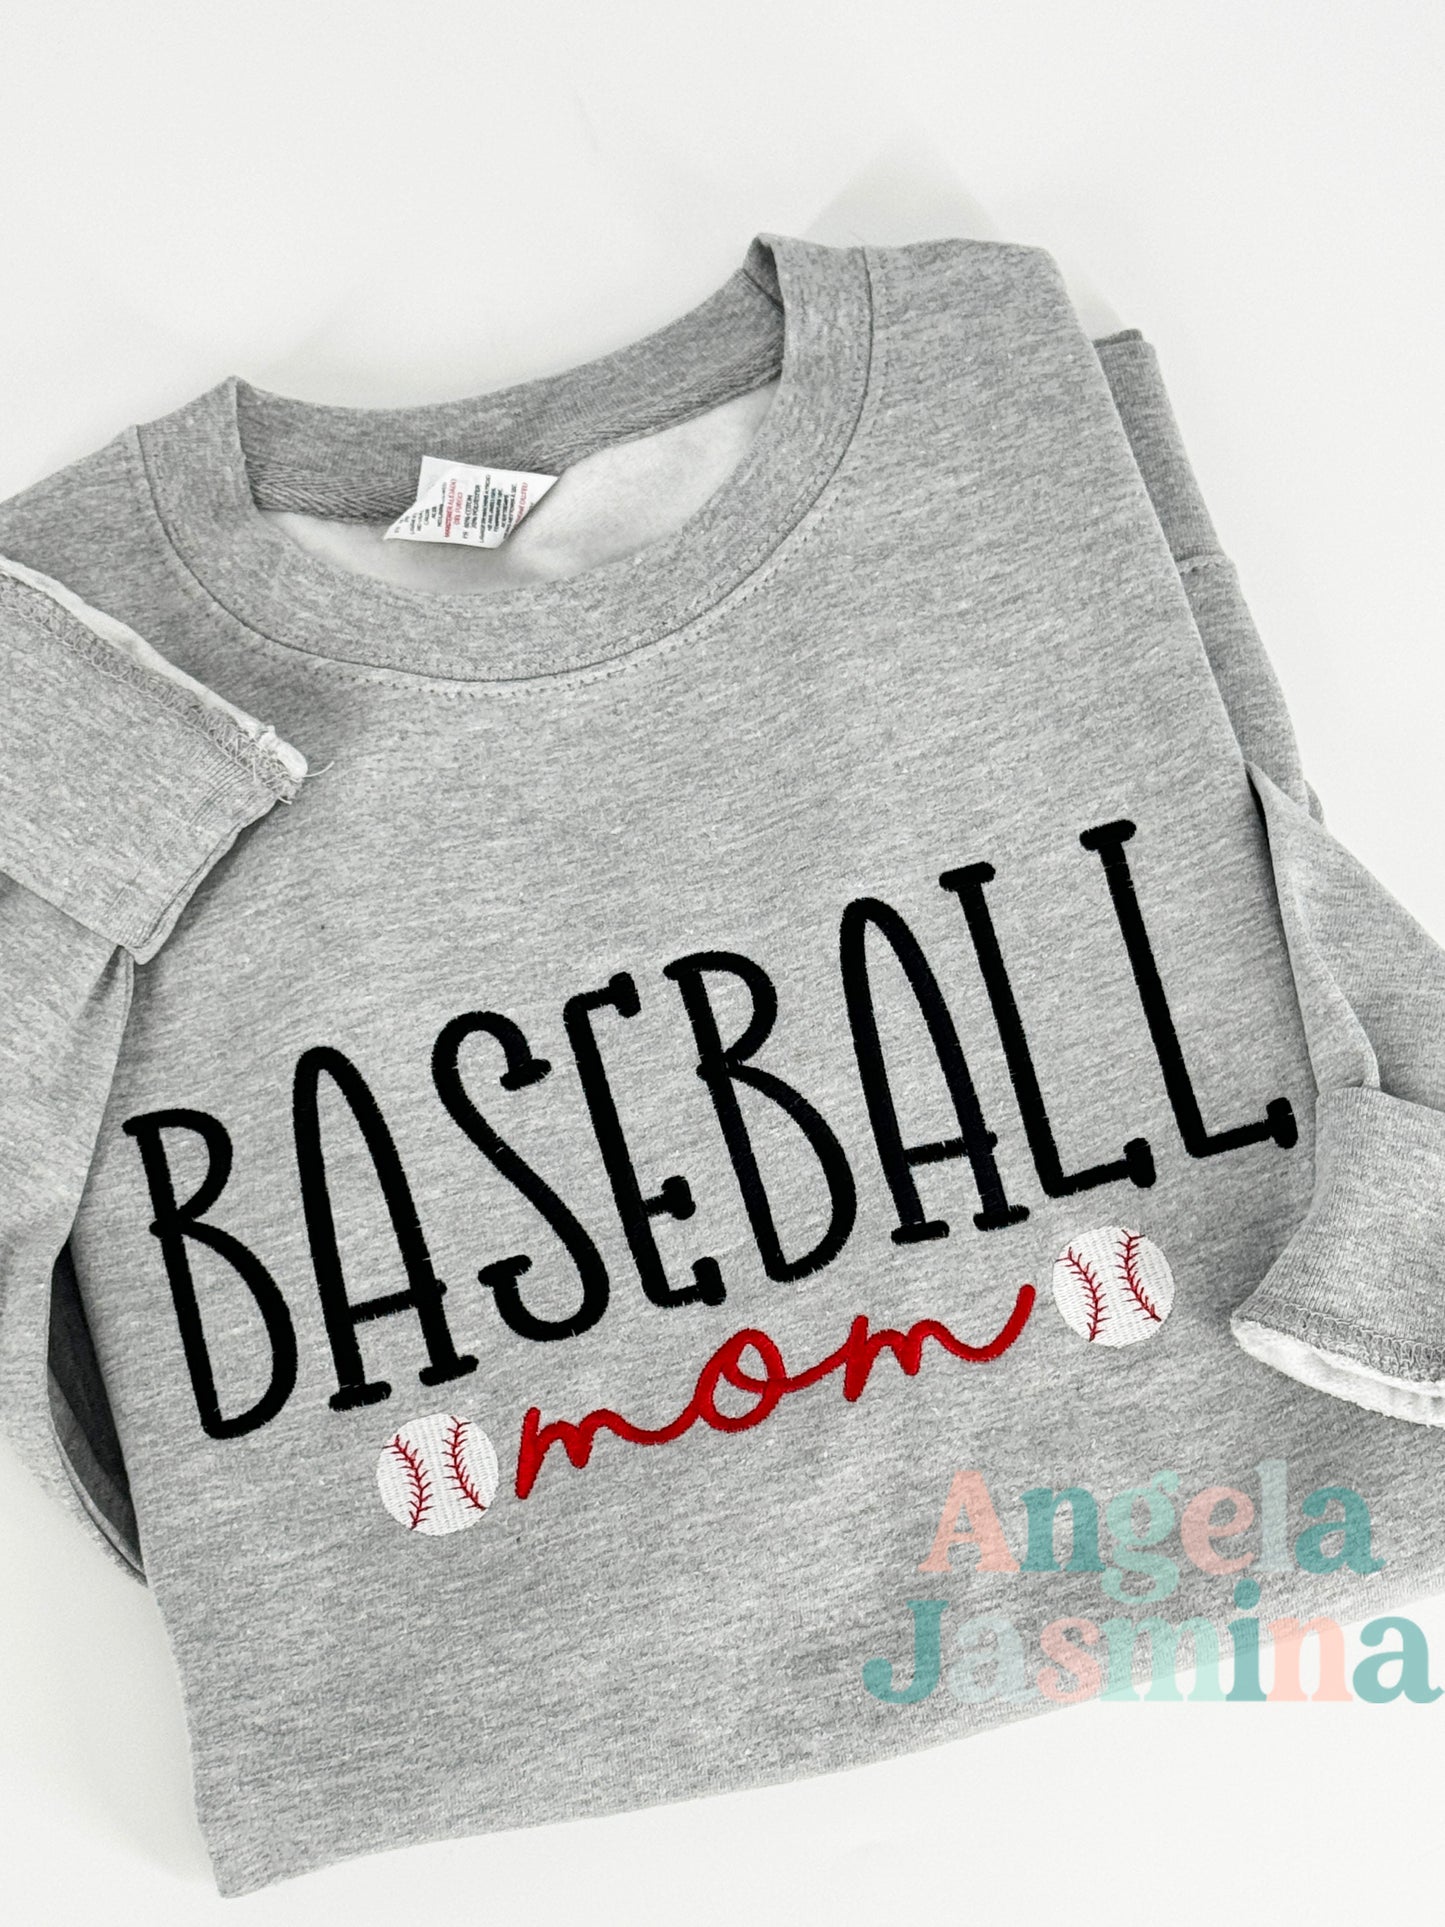 Baseball Mom Embroidered Sweatshirt